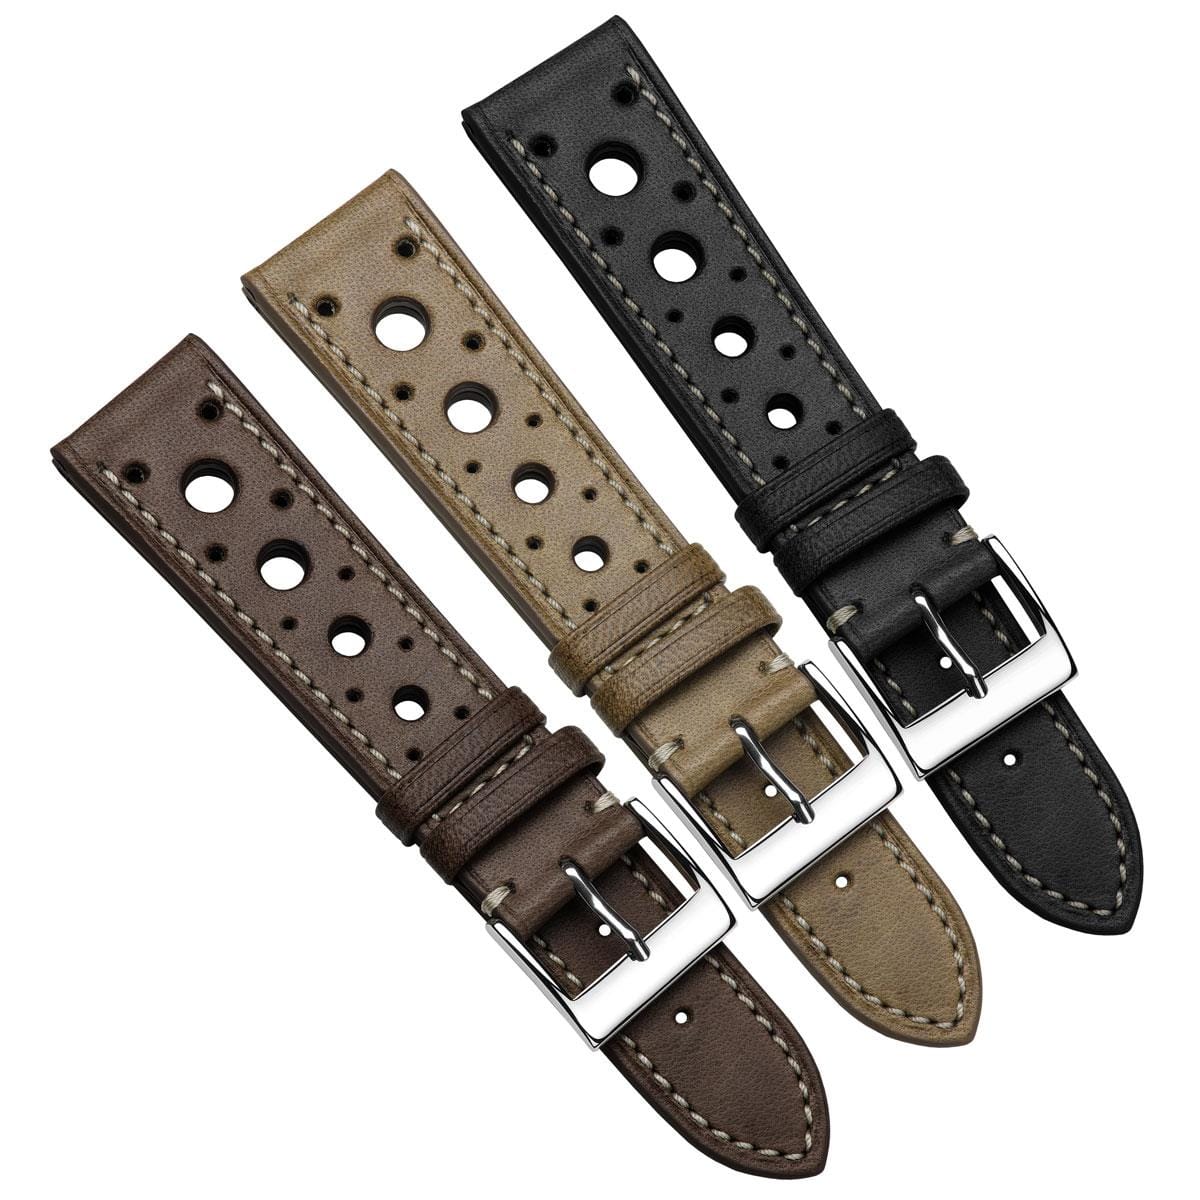 Boutsen Cavallo Racing Handmade Leather Watch Strap - Chocolate Brown